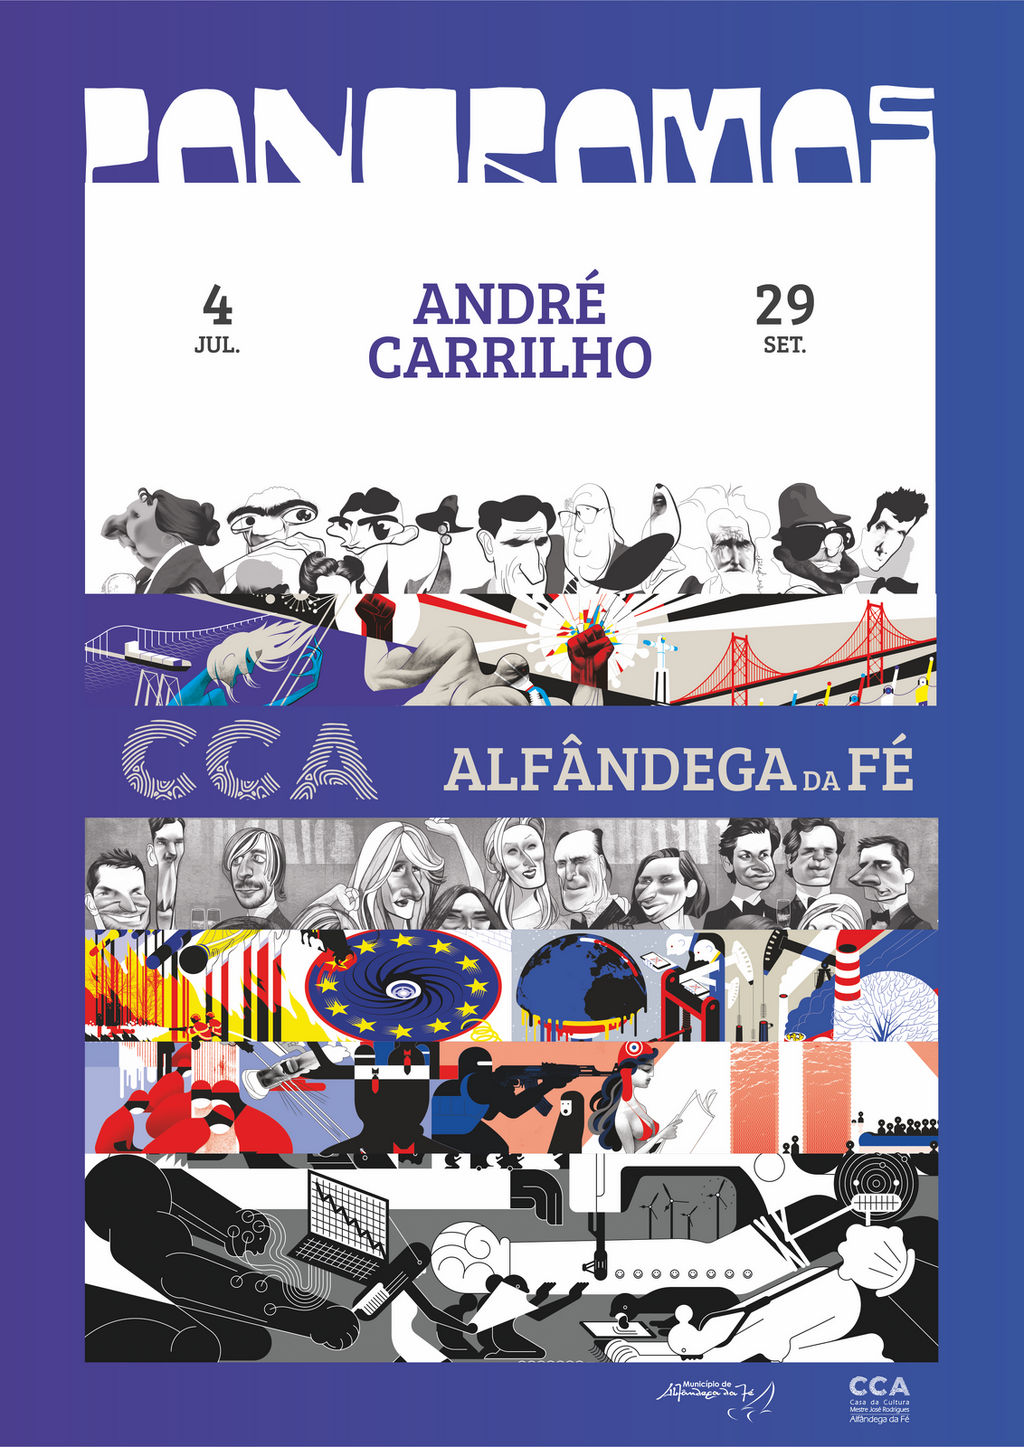 cartaz panoramas de André Carrilho